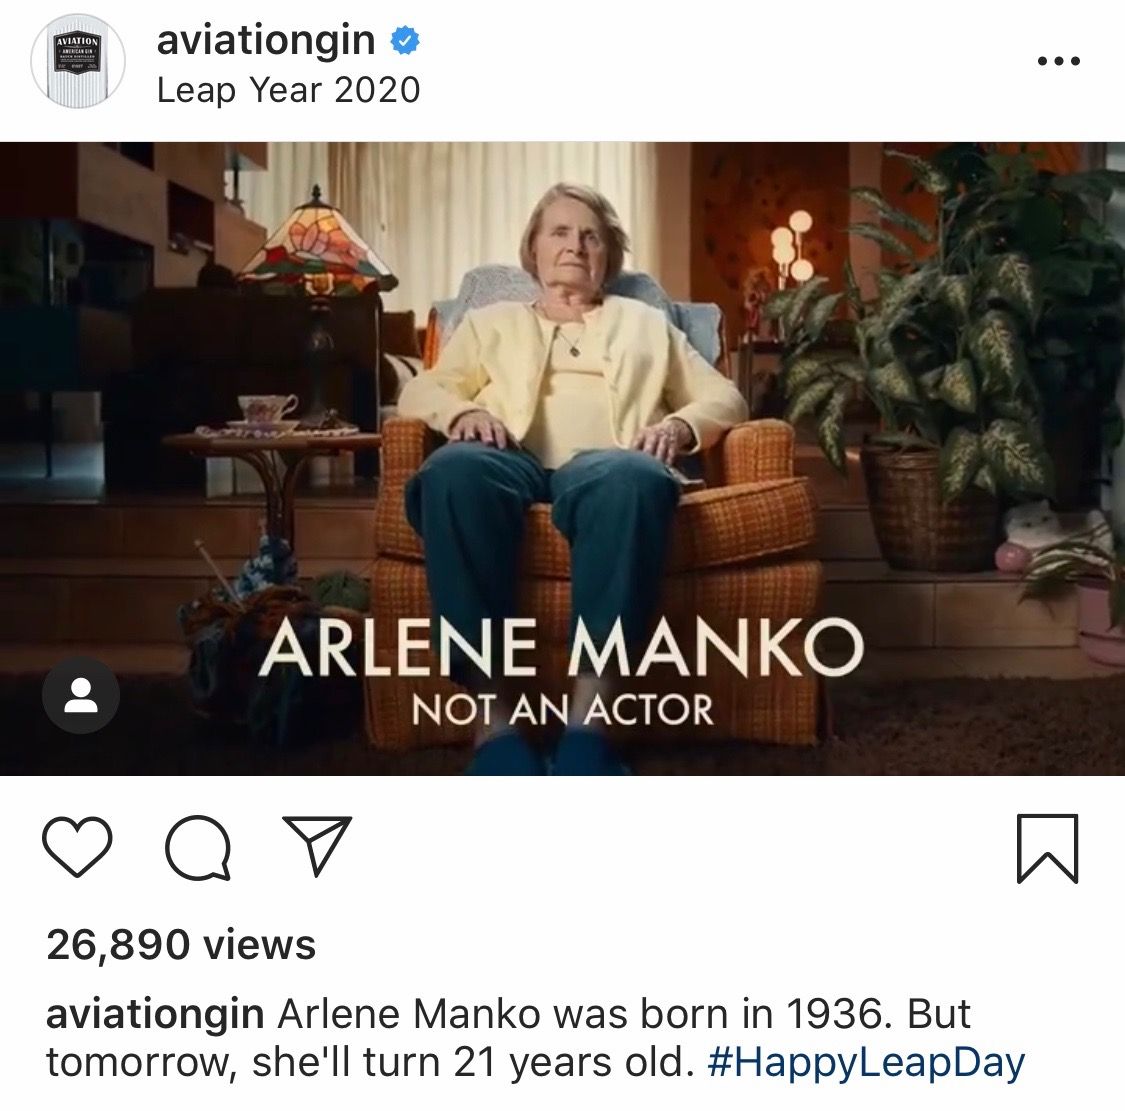 Still image taken from an @aviationgin Instagram post